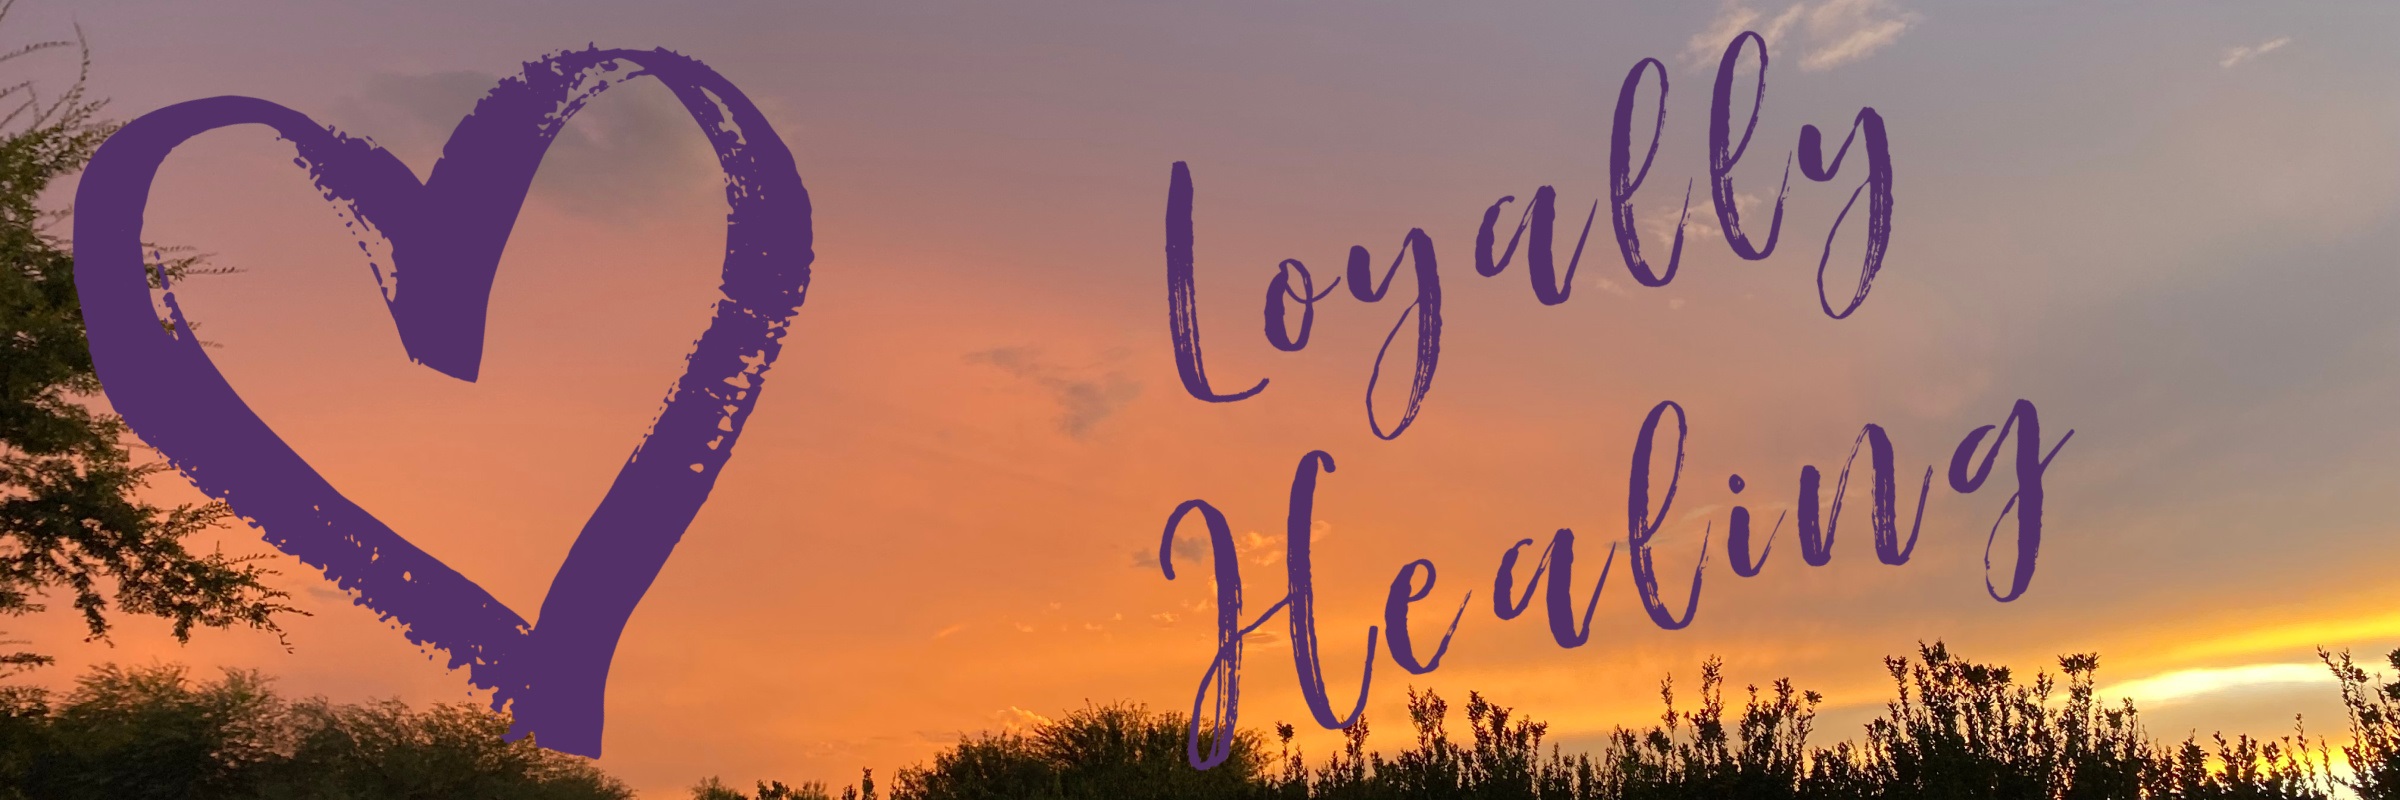 Loyally Healing